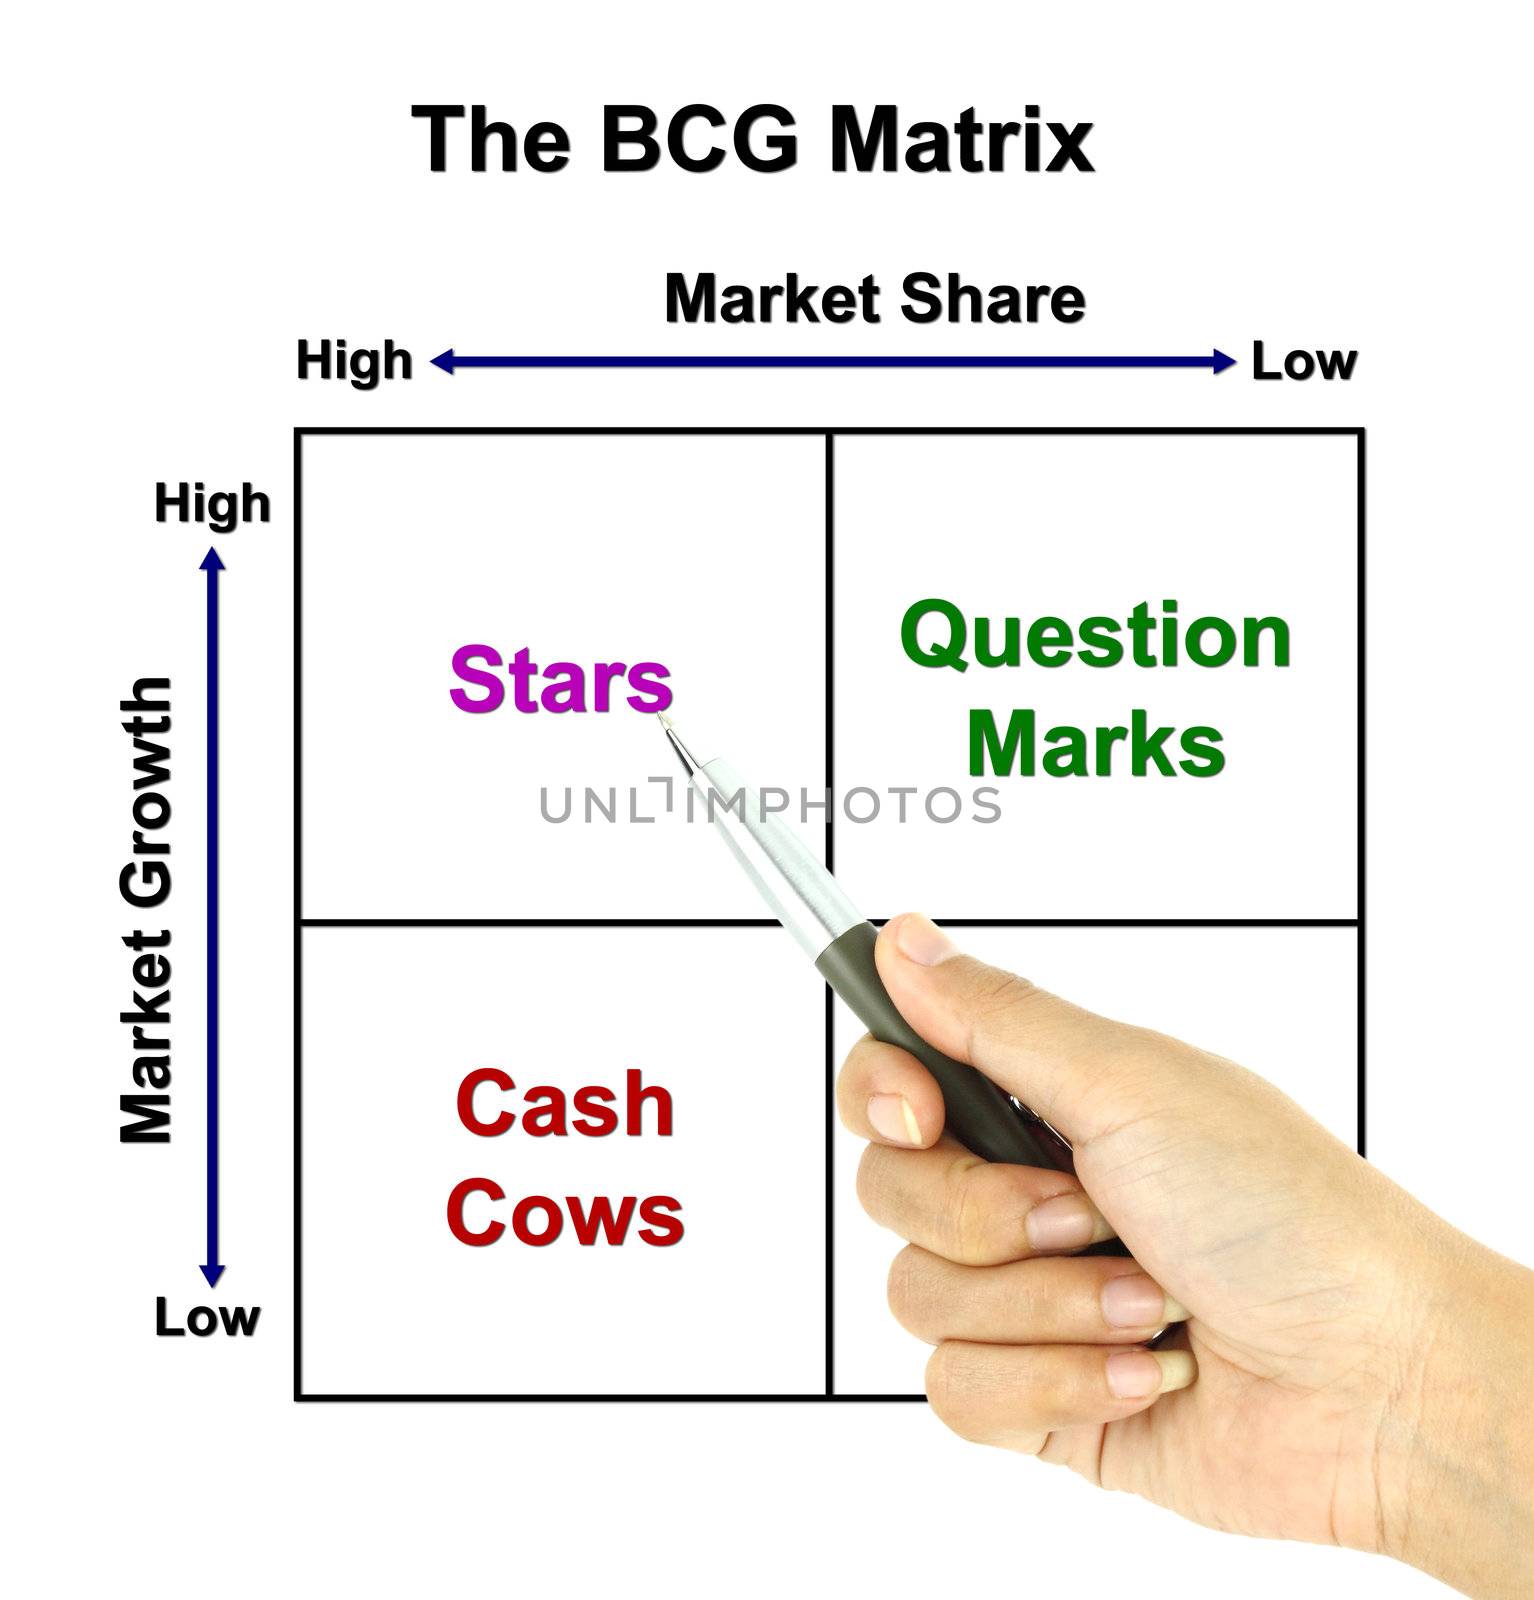 a pen pointer the BCG Matrix chart (marketing concept pointer at star)